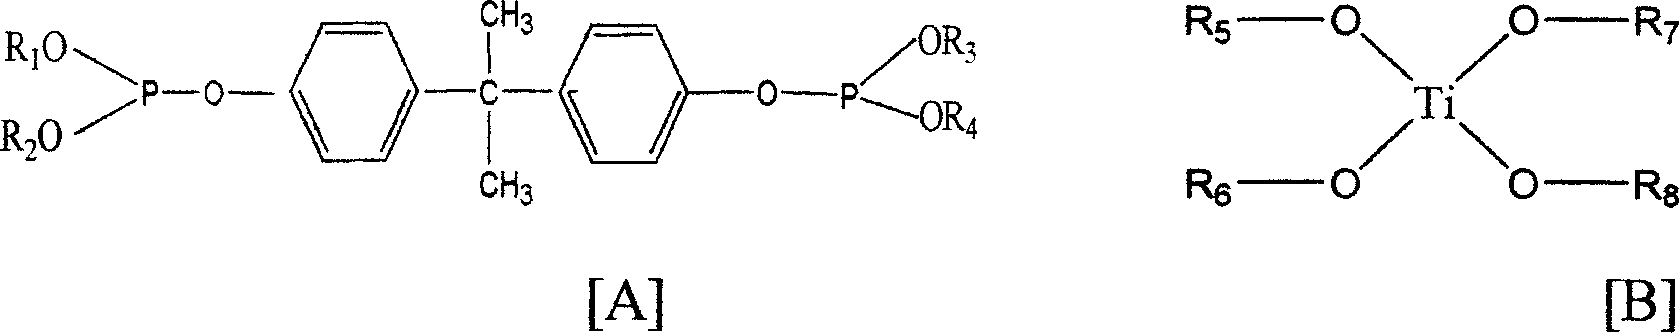 Method for producing poly-p-benzene dicarboxylic acid trimethylene glycol ester